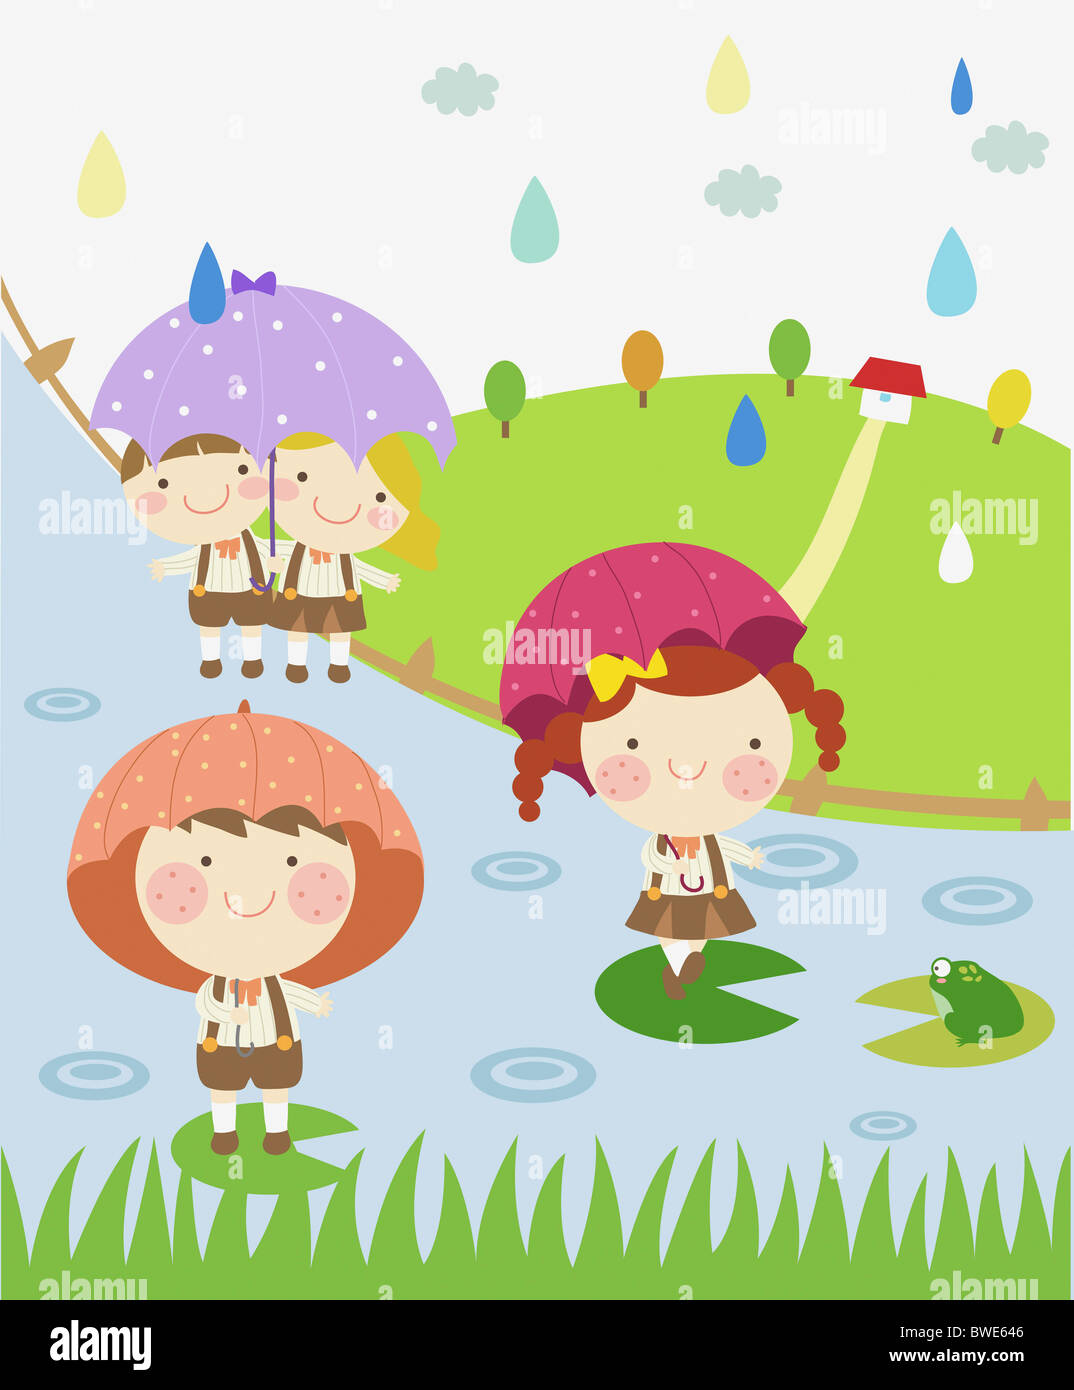 illustration of kids in rainy day Stock Photo - Alamy